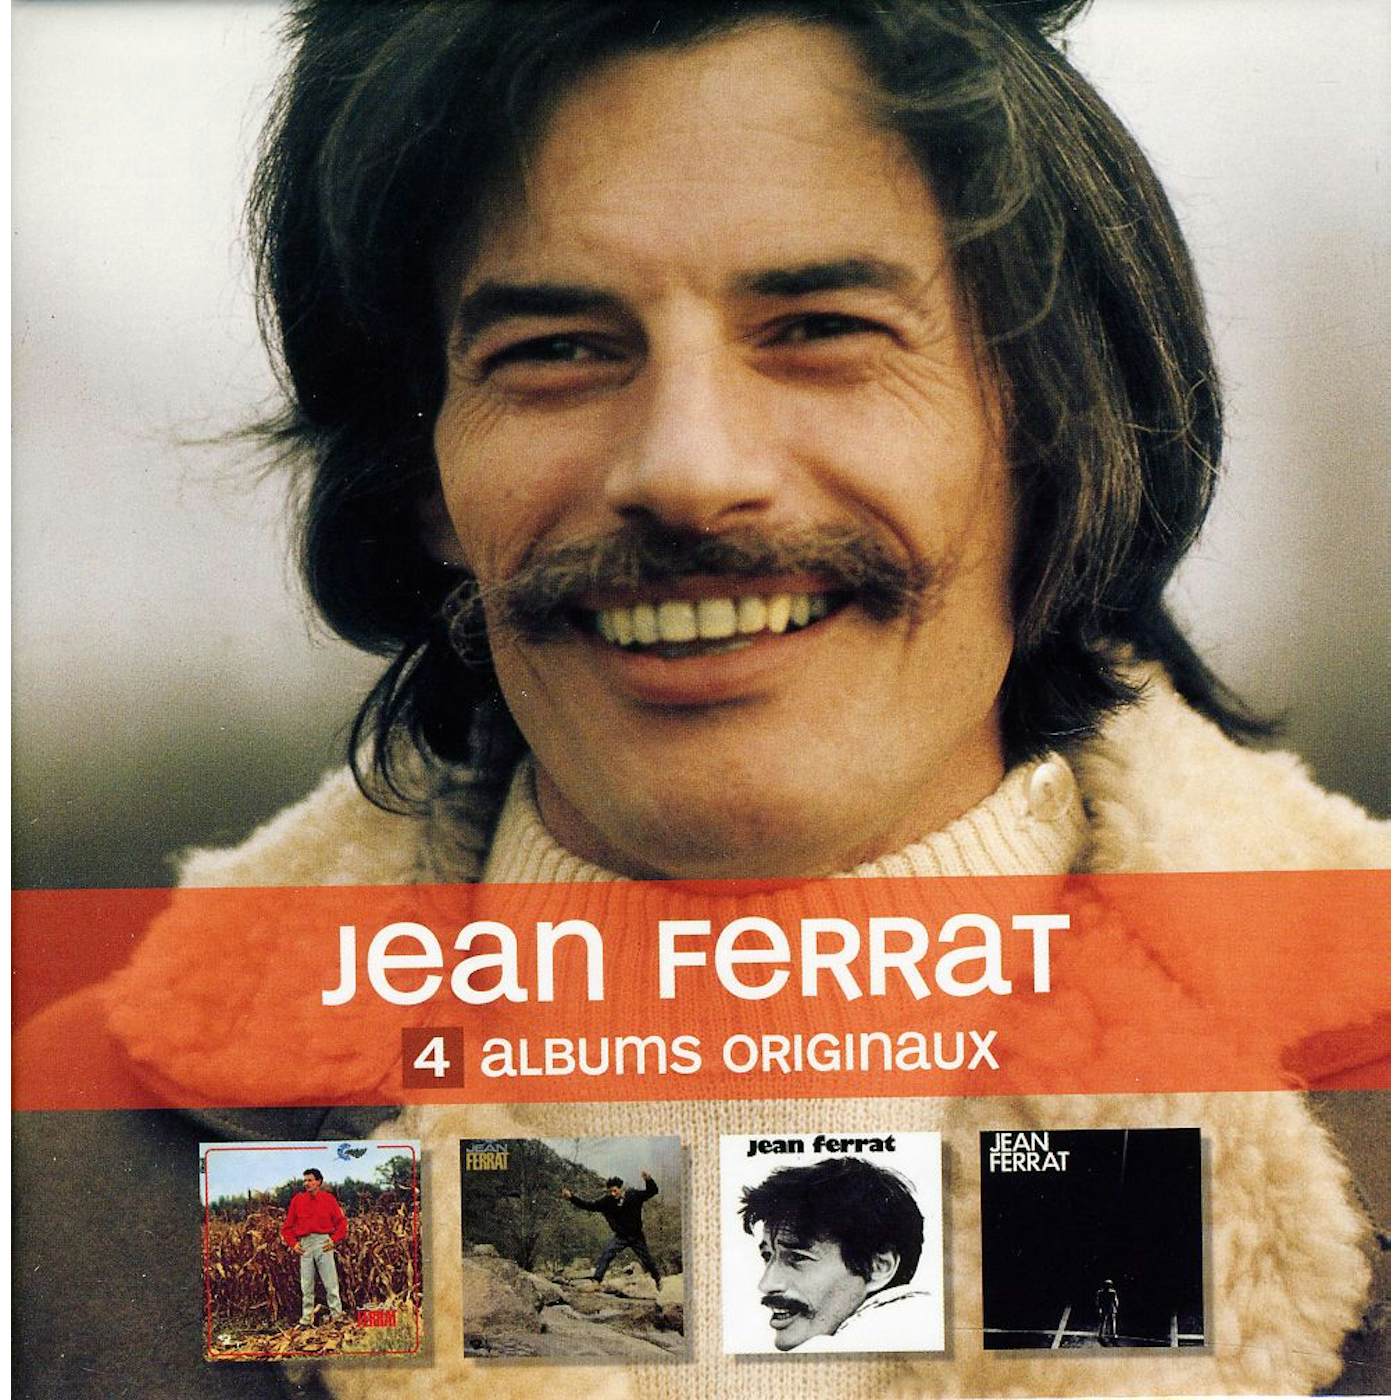 Jean Ferrat 4 ORIGINAL ALBUMS CD